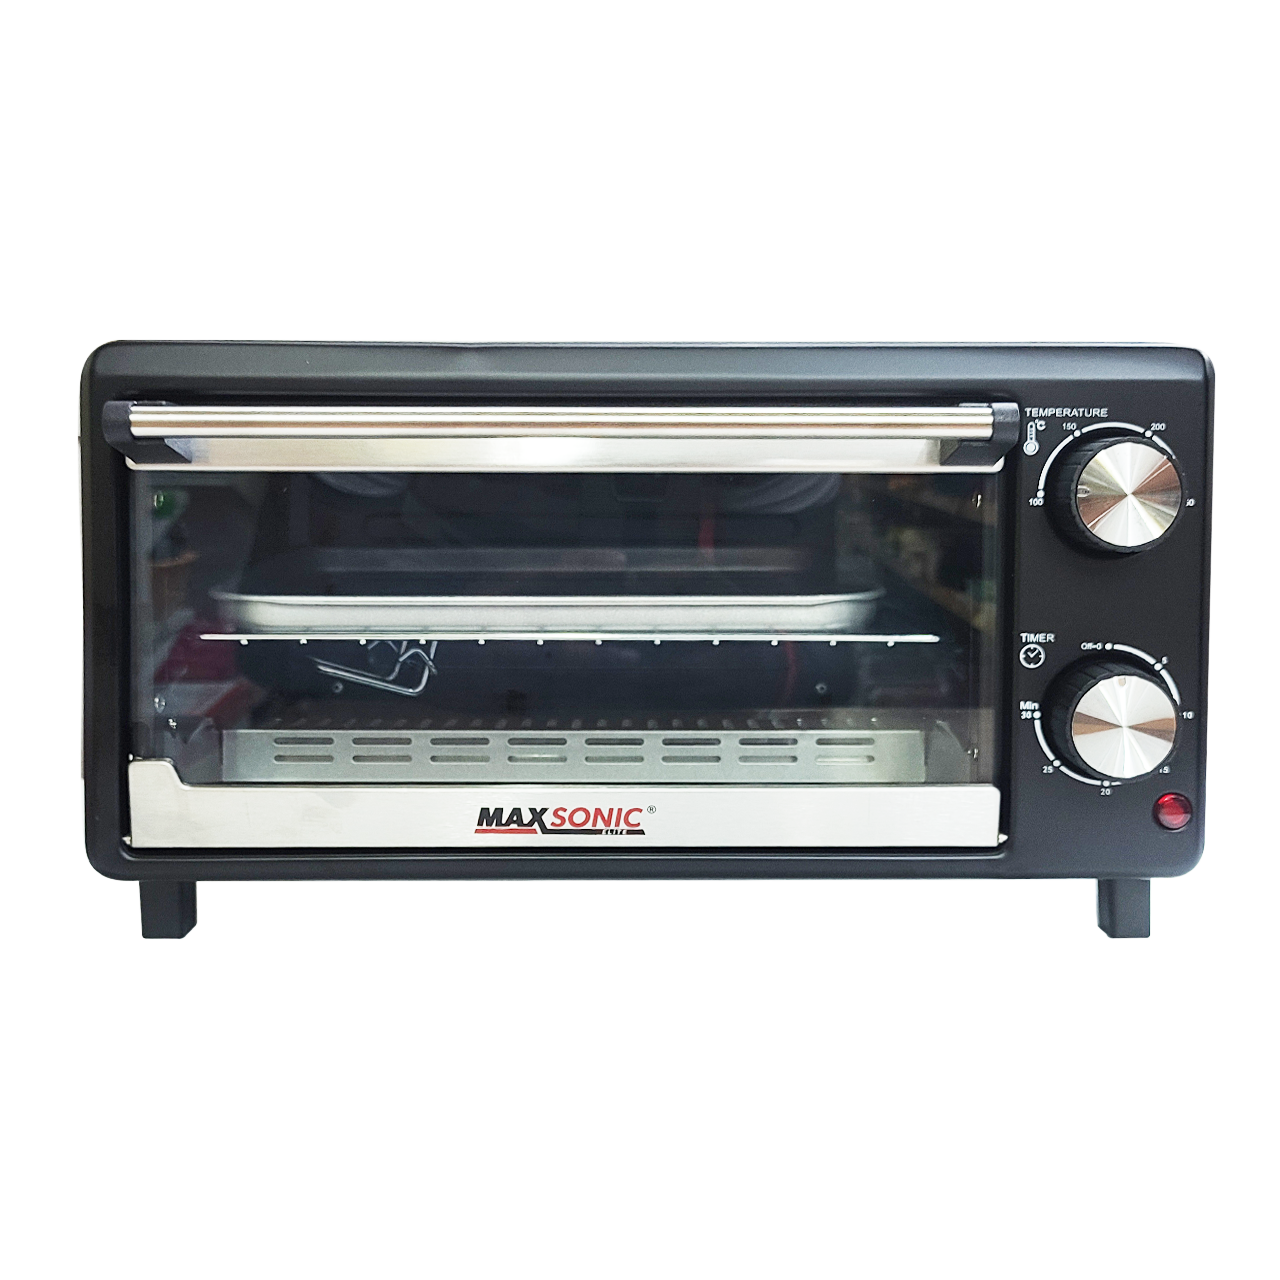 Maxsonic - 10L Toaster Oven - Charran's Chaguanas